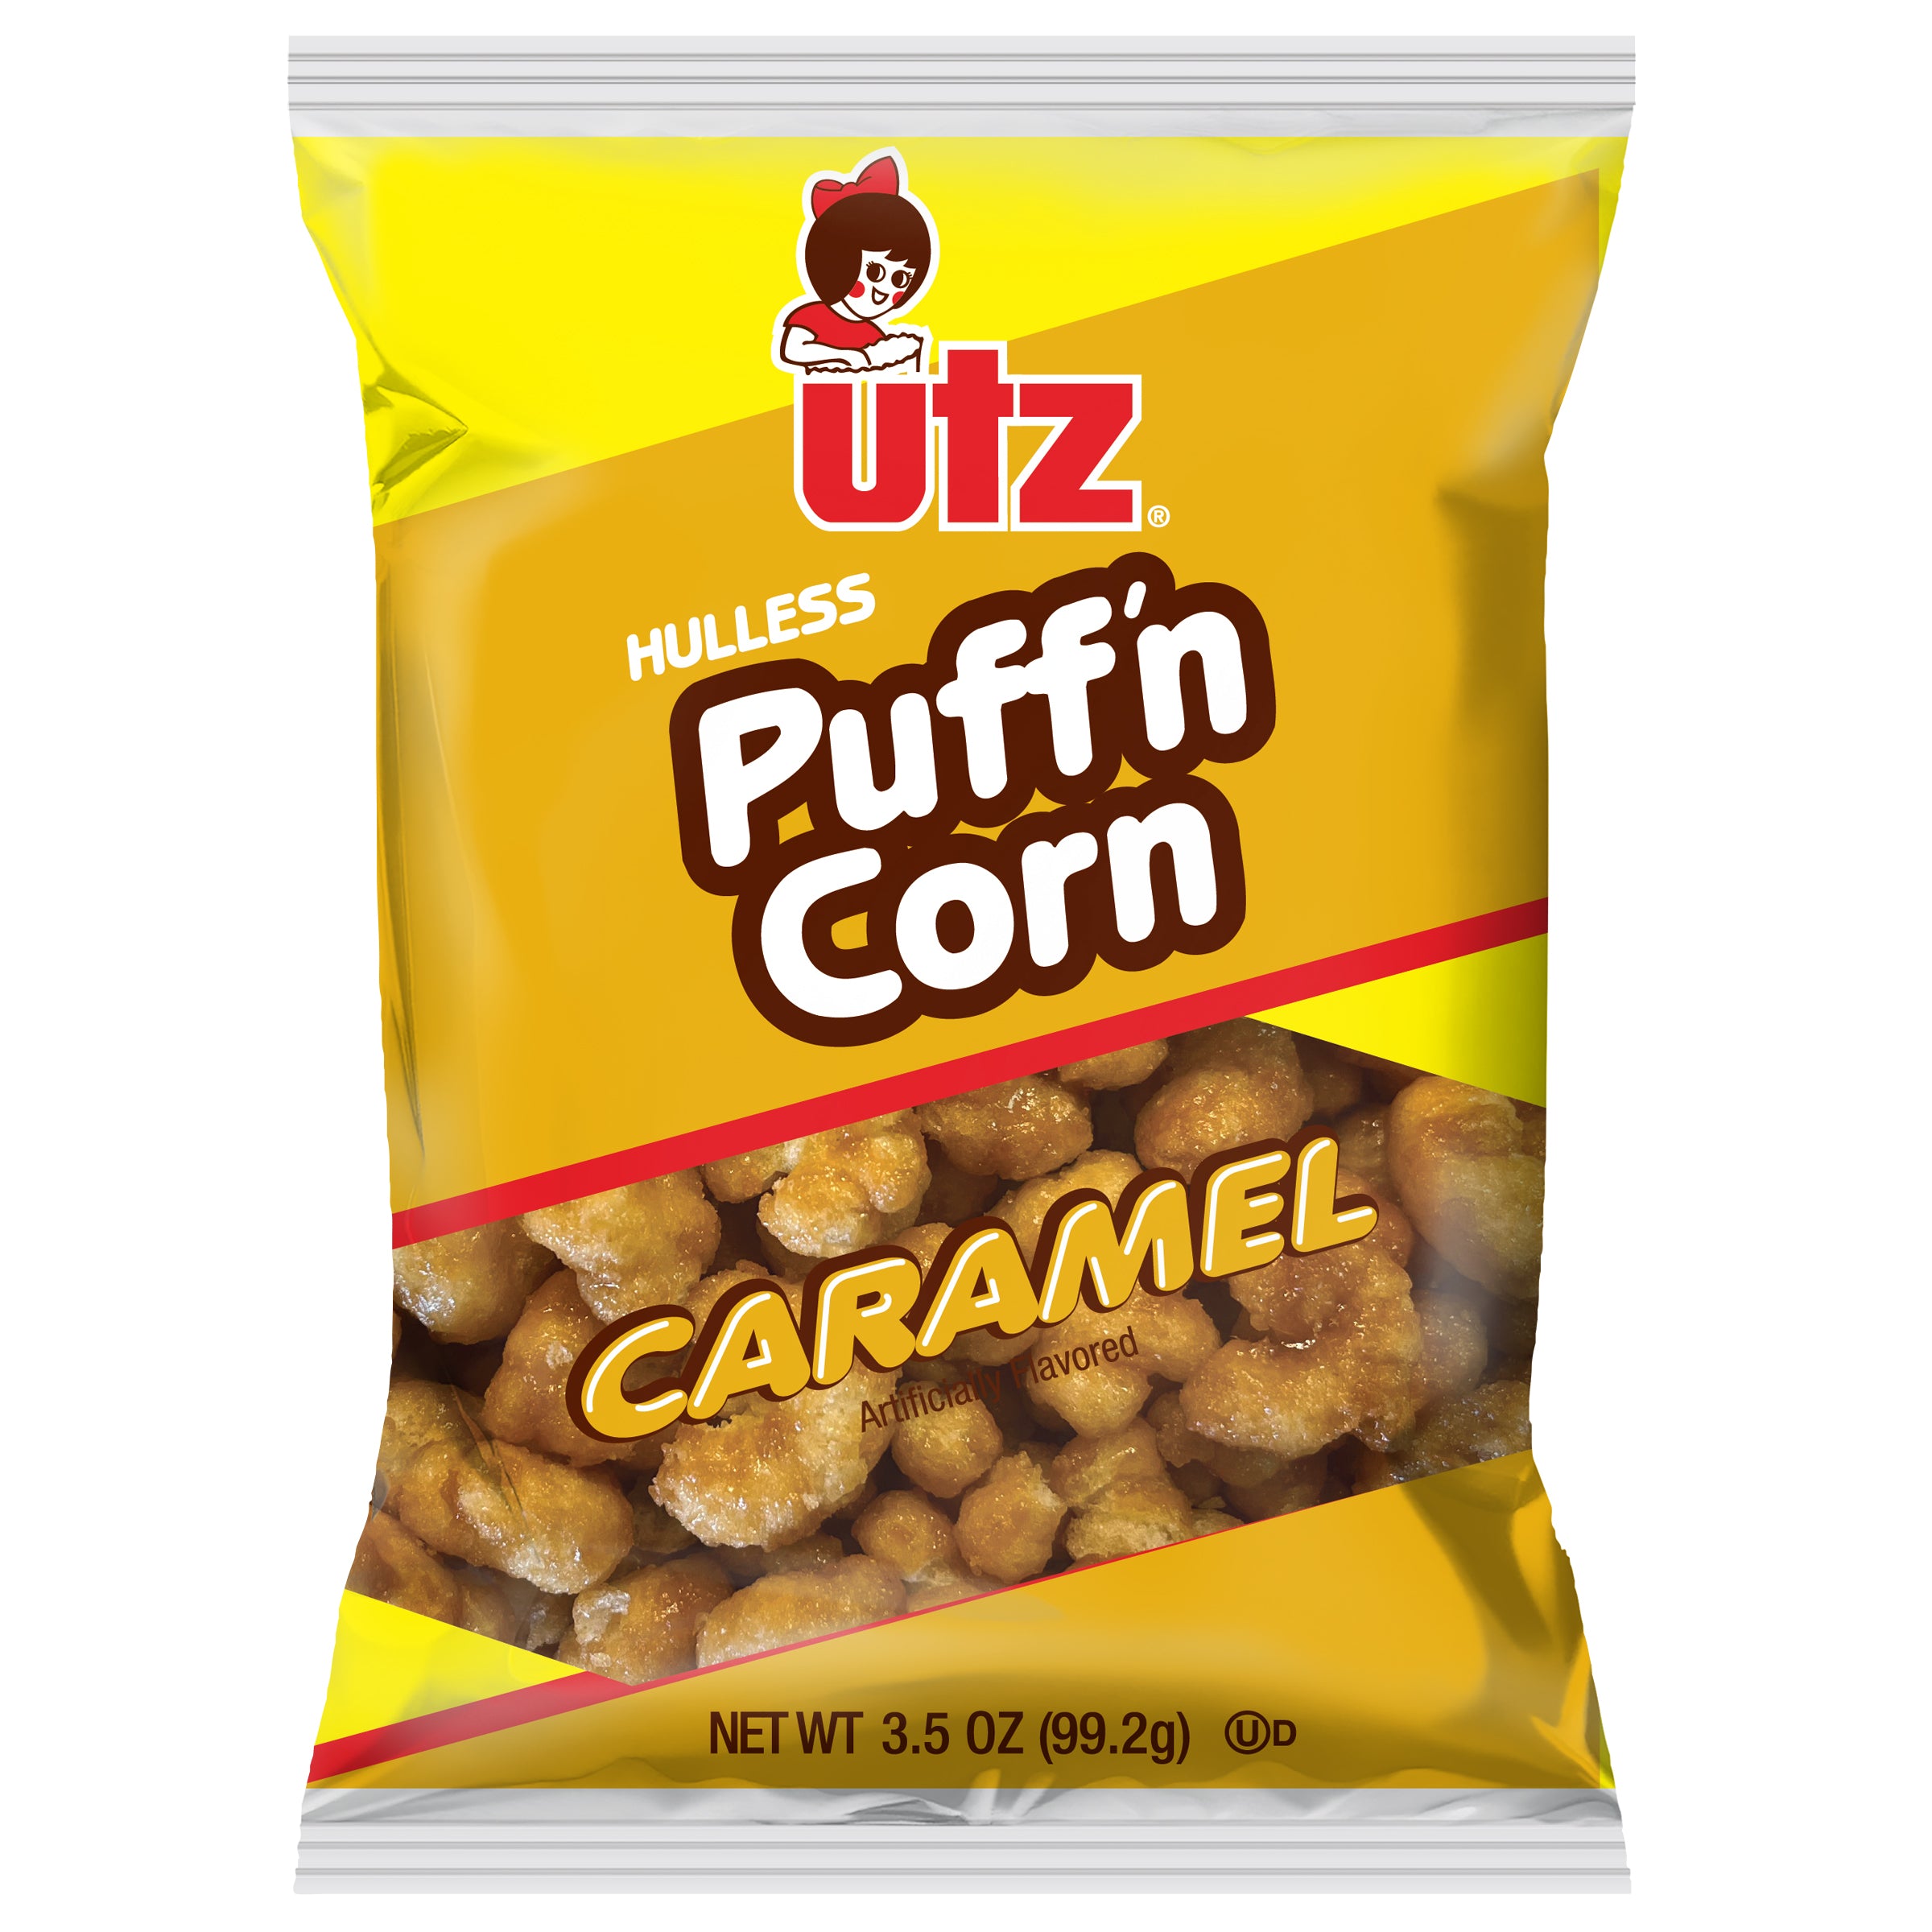 Utz Puff'n Corn Caramel 3.5 oz.